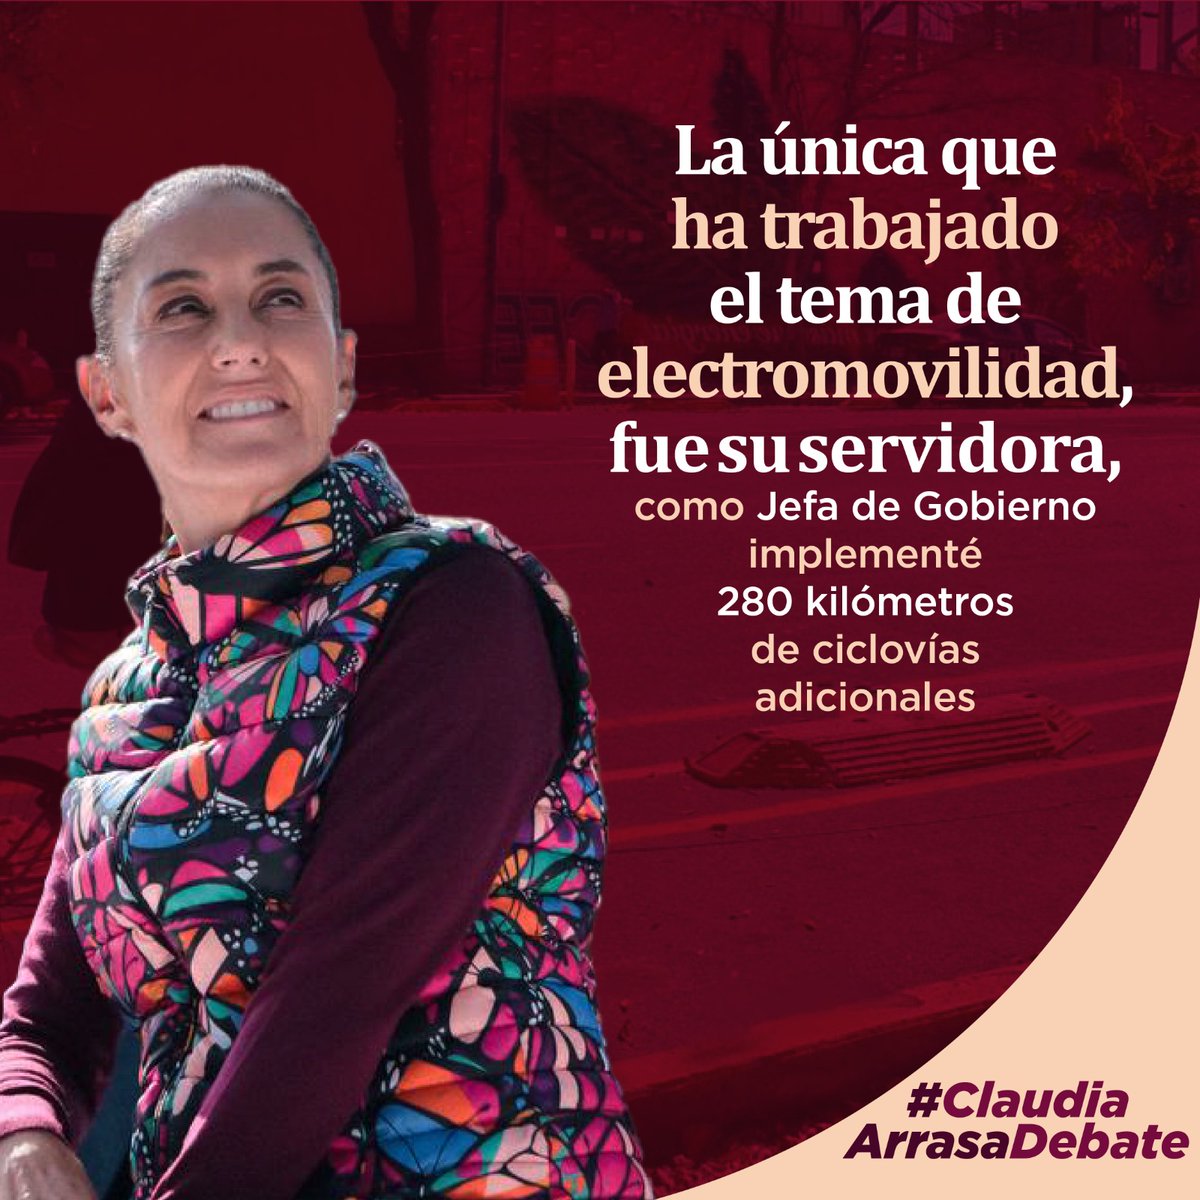 #GanamosElDebate #ClaudiaArrasaDebate @Claudiashein 💜💜💜